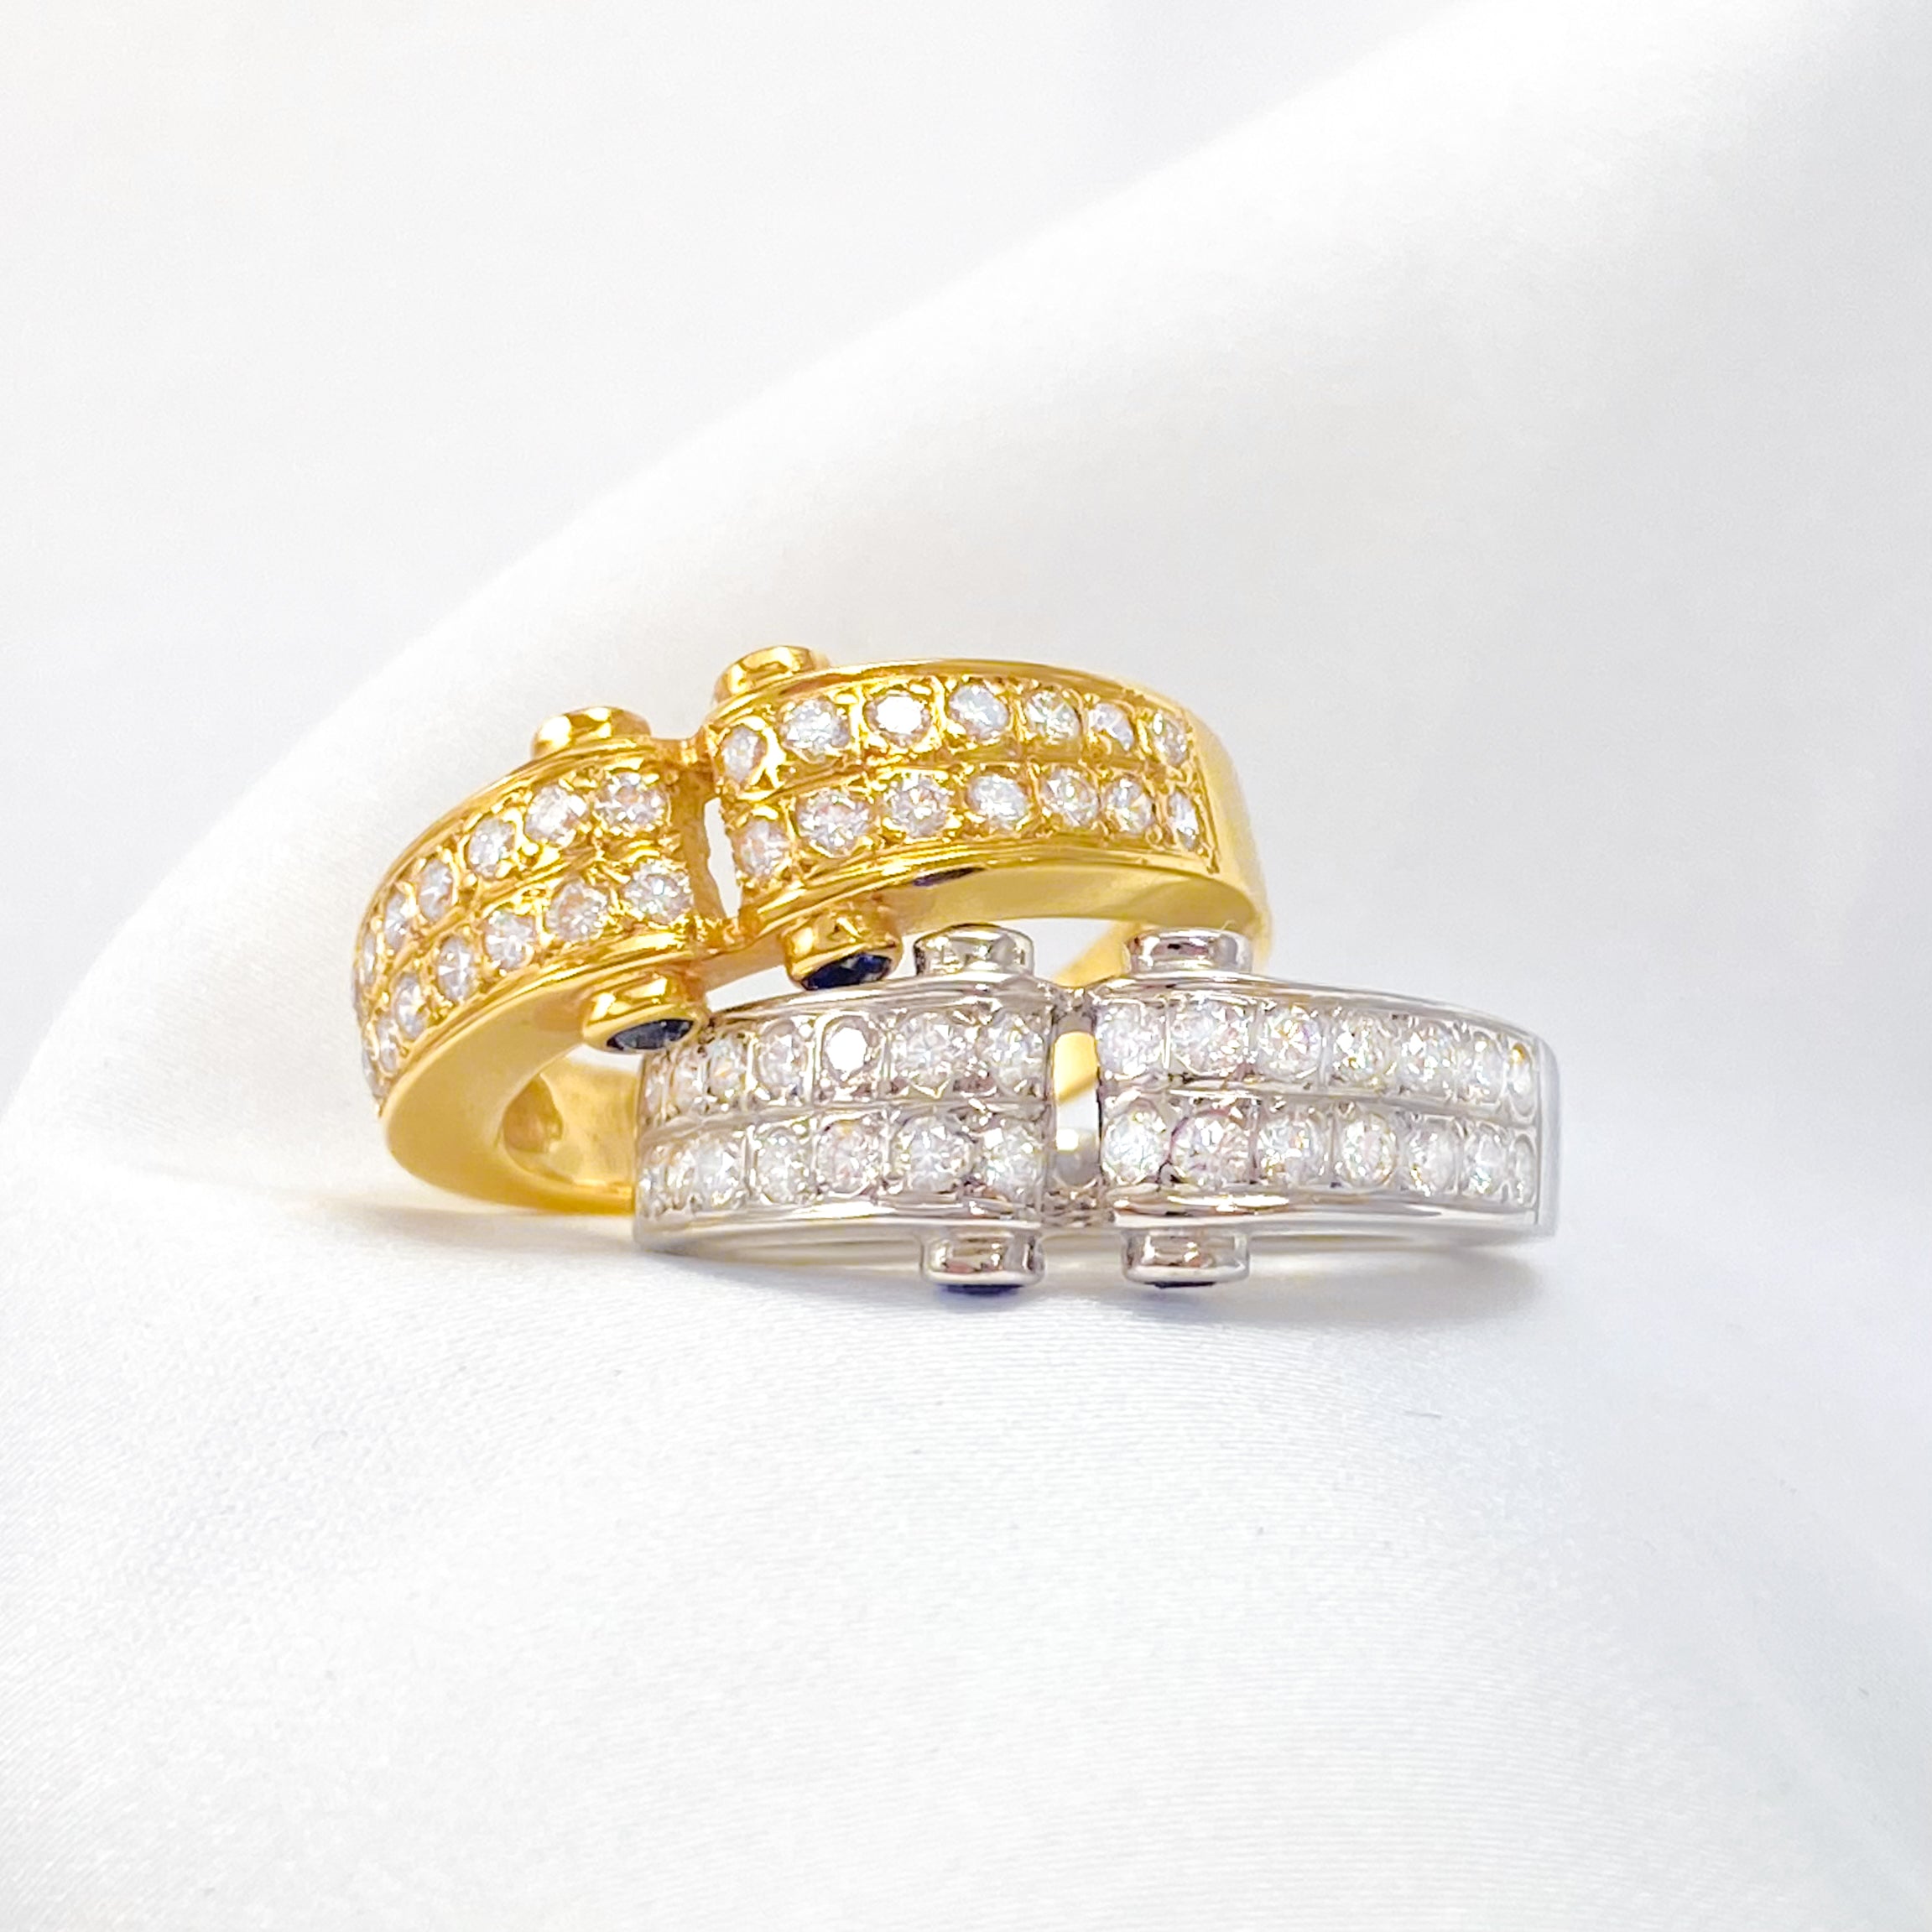 Double Diamond Arche Ring in white gold